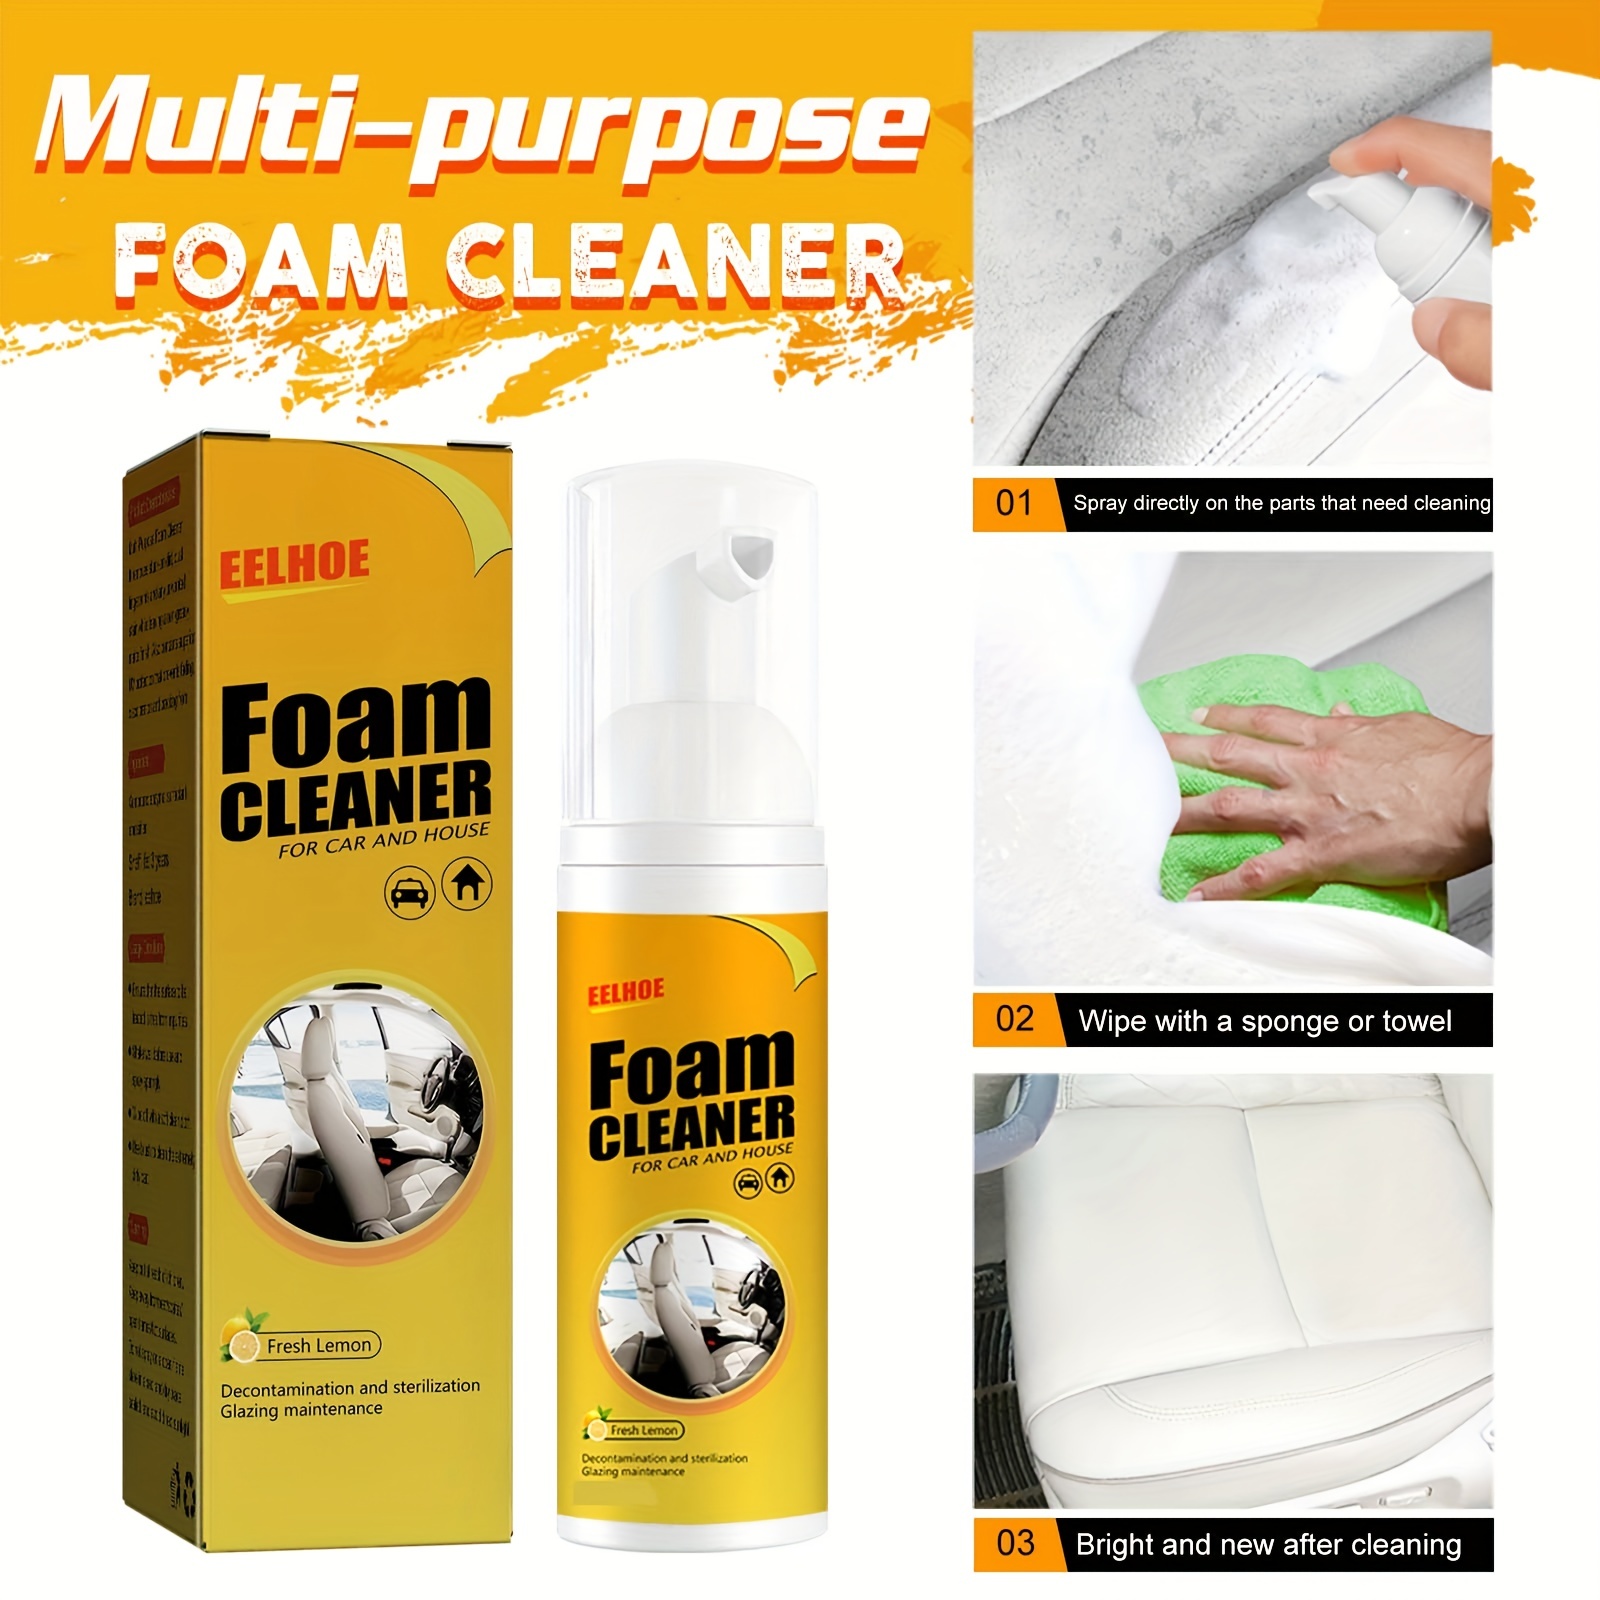 MULTI-PURPOSE FOAM CLEANER